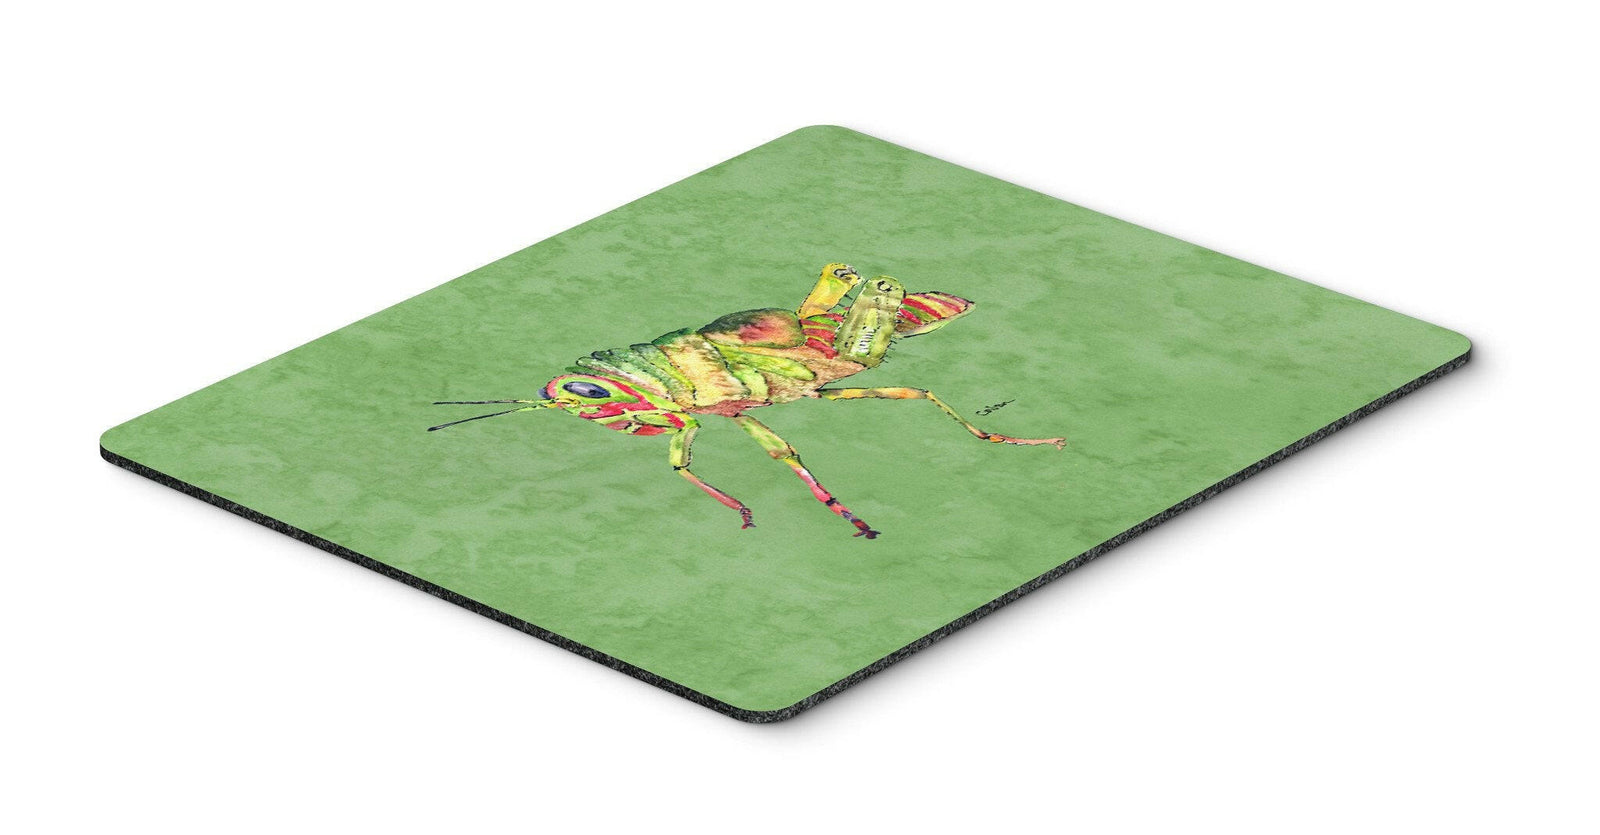 Grasshopper on Avacado Mouse Pad, Hot Pad or Trivet by Caroline's Treasures